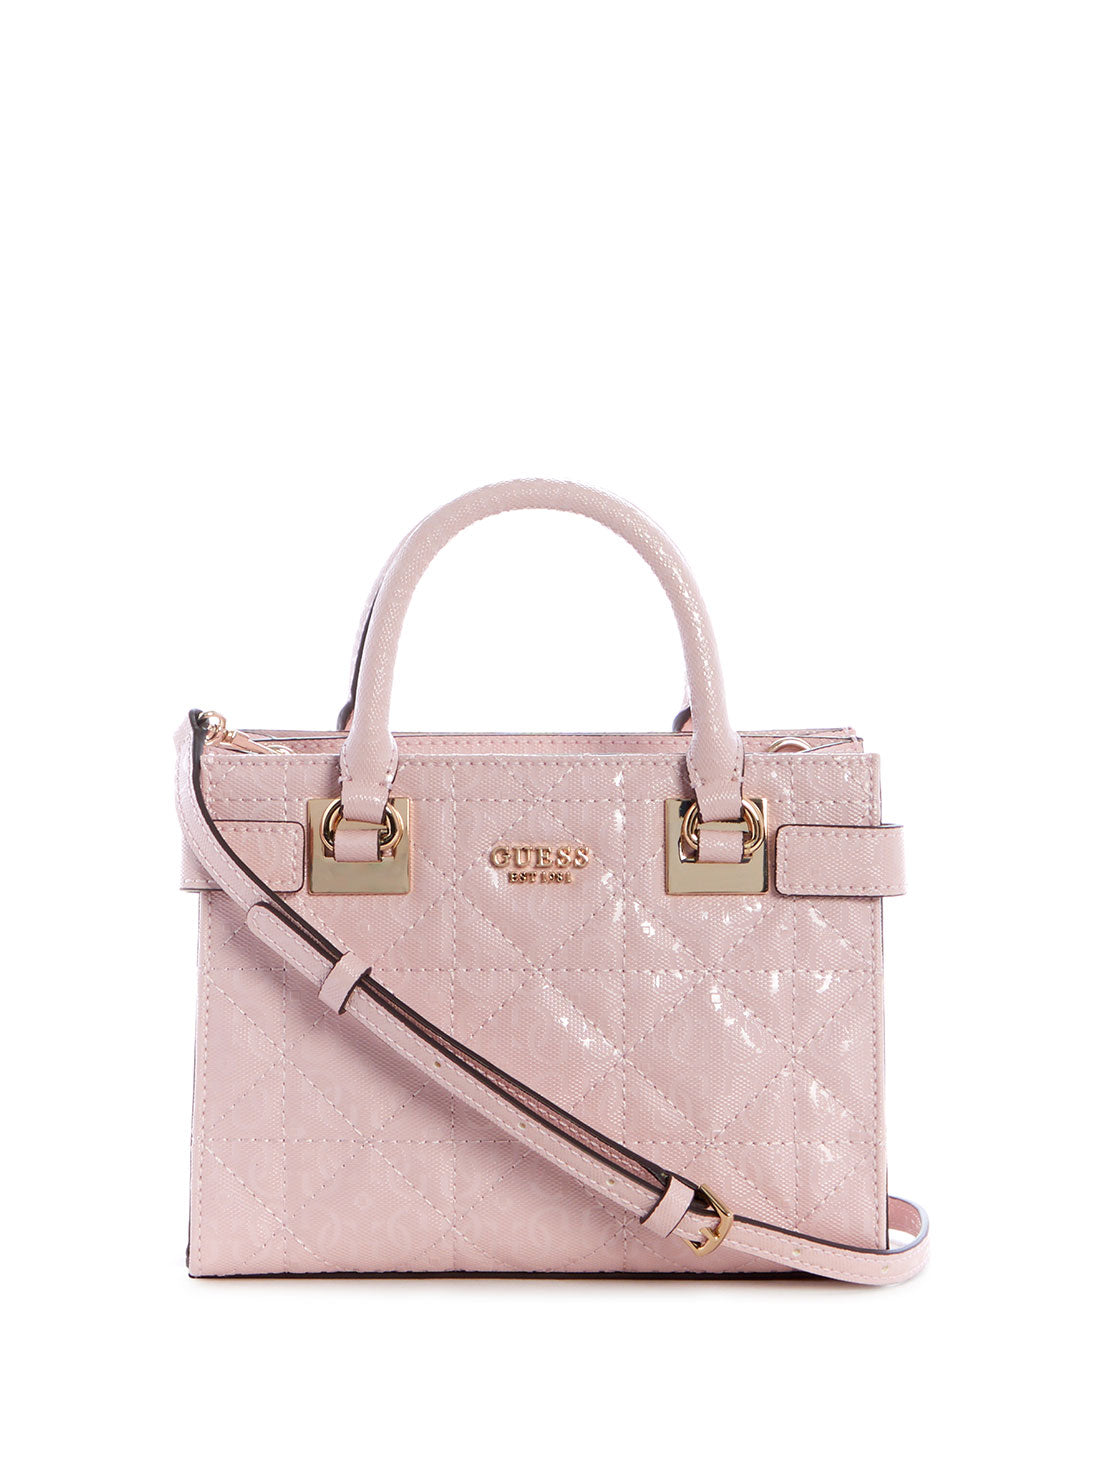 GUESS Womens Pink Malia Mini Satchel Bag GG848876 Front View